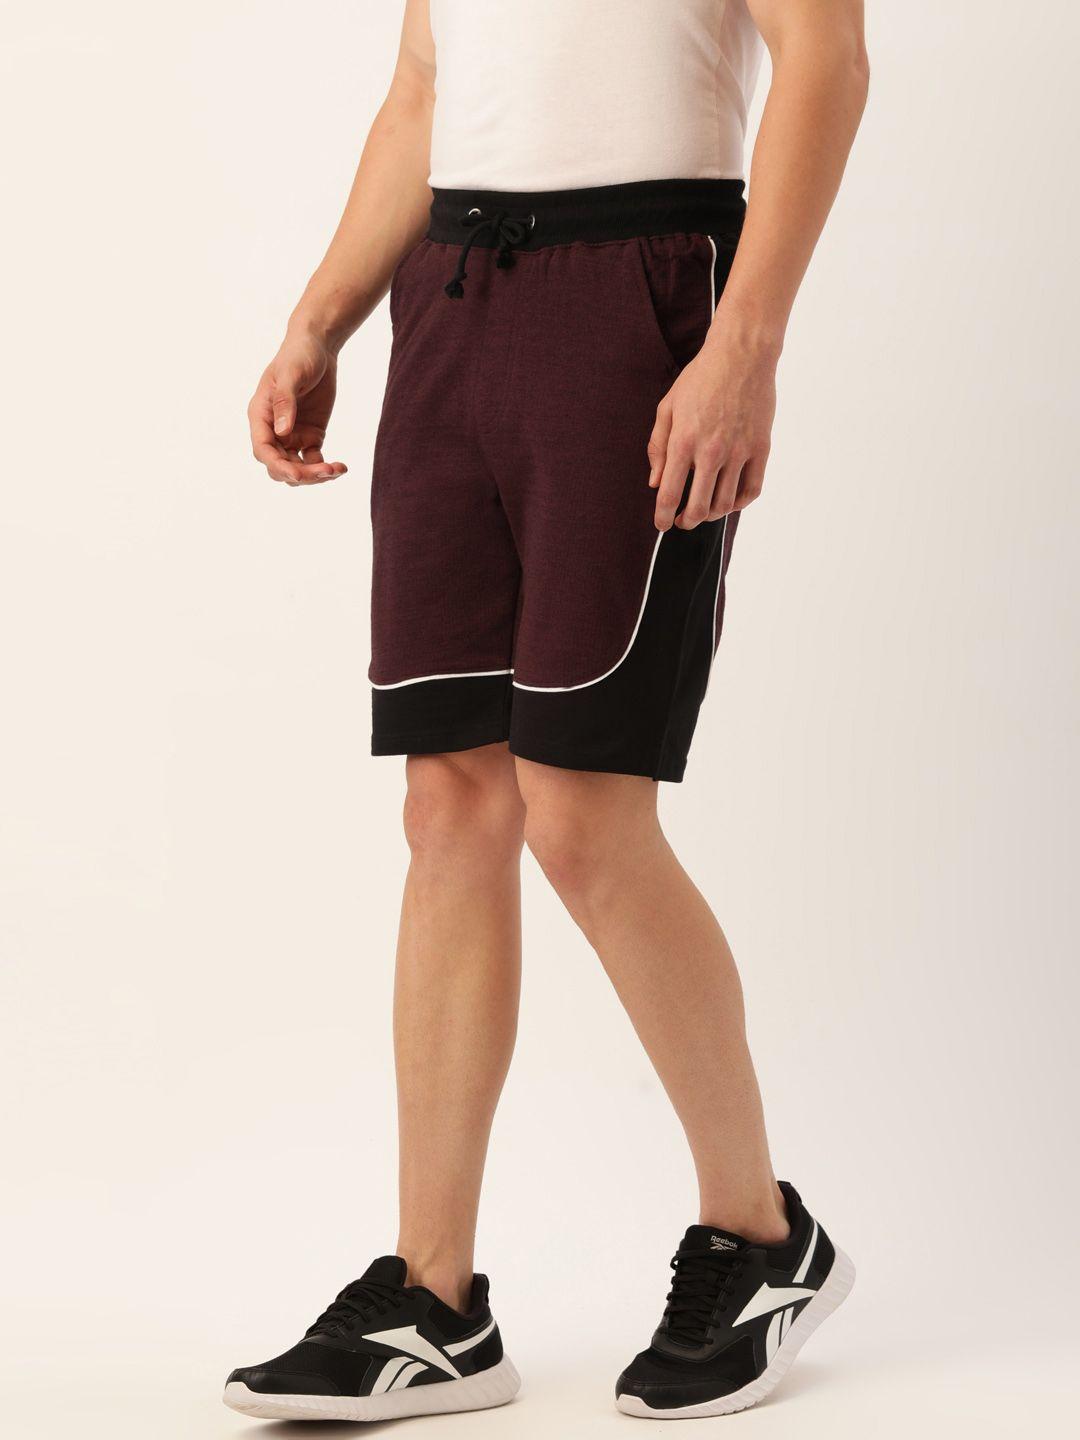 arise-men-maroon-&-black-colourblocked-shorts